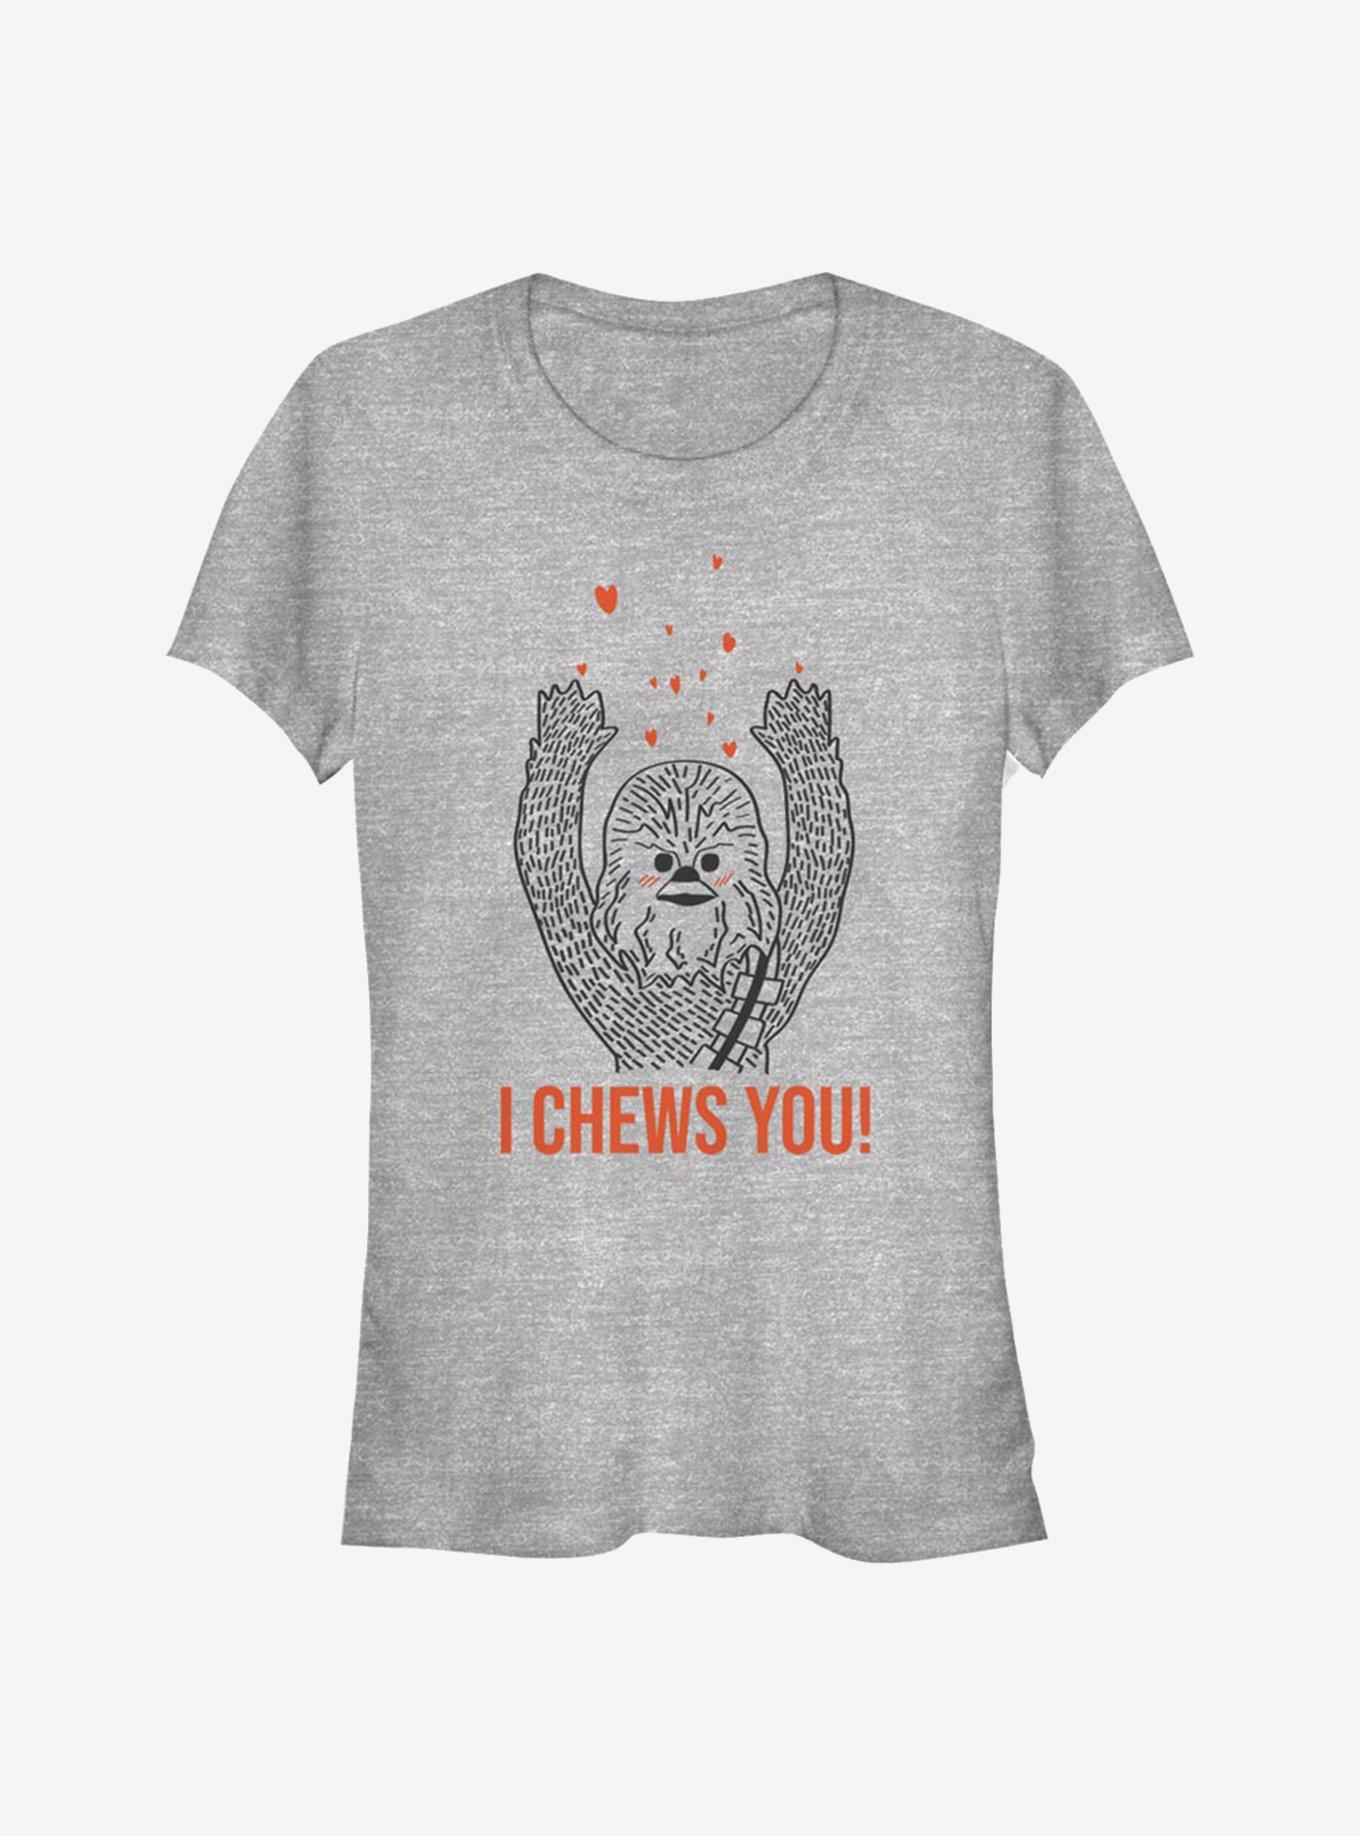 Star Wars I Chews You Chewie Girls T-Shirt